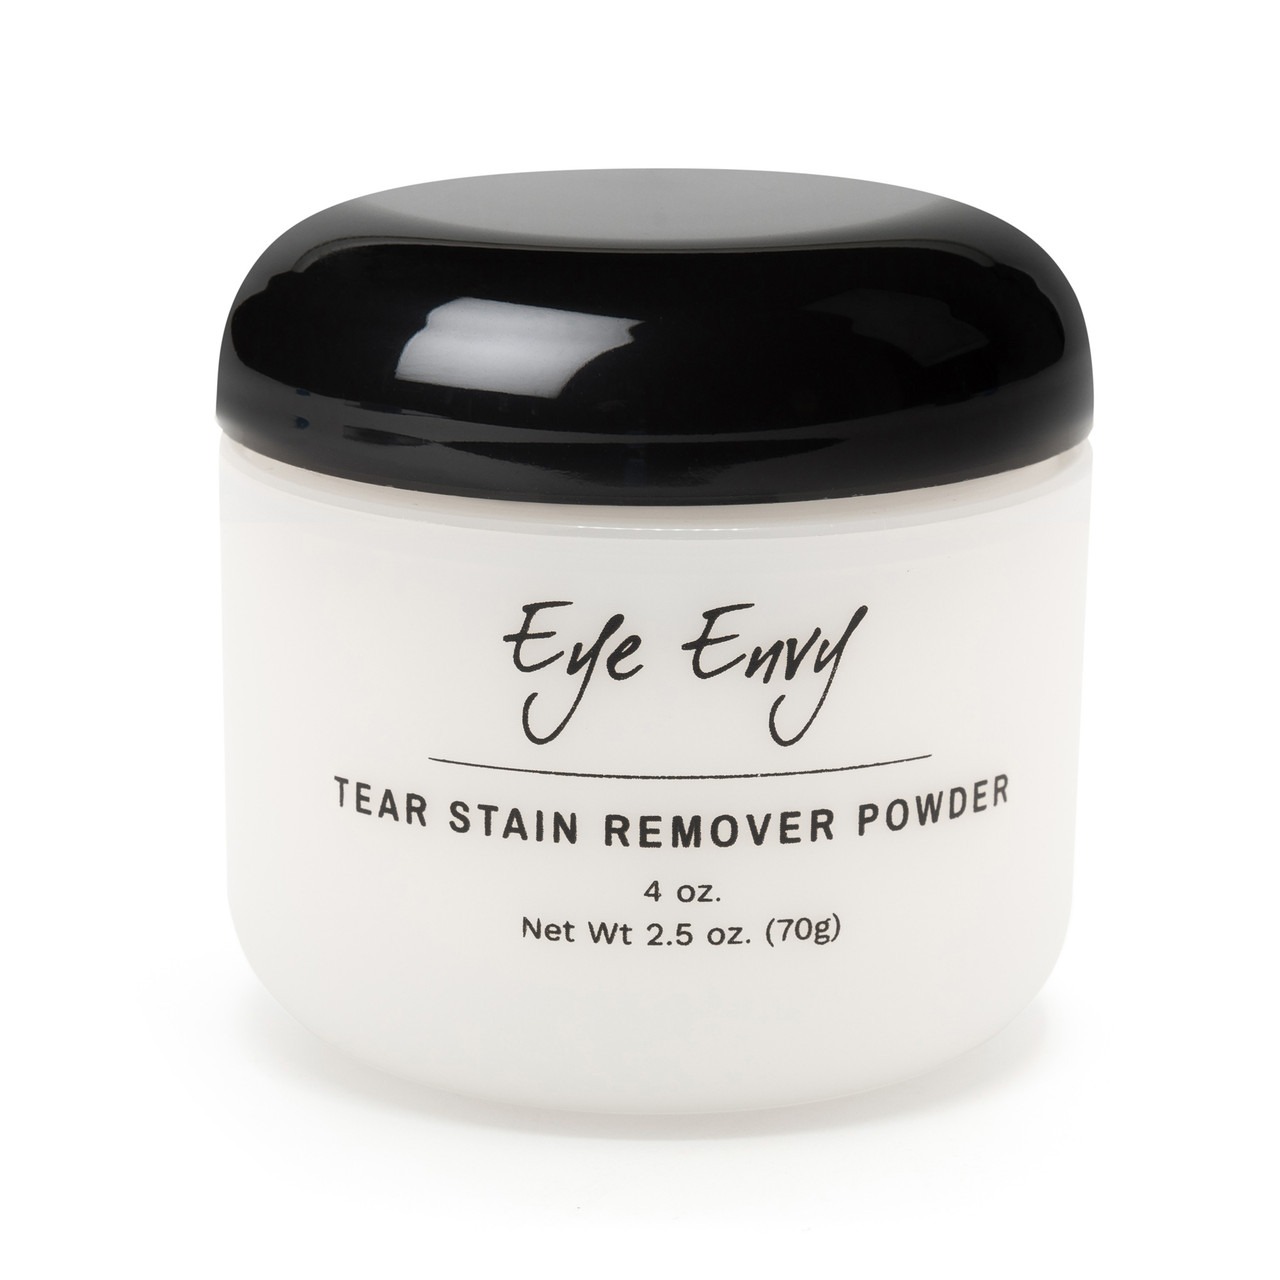 Eye Envy Tear Stain Remover Powder